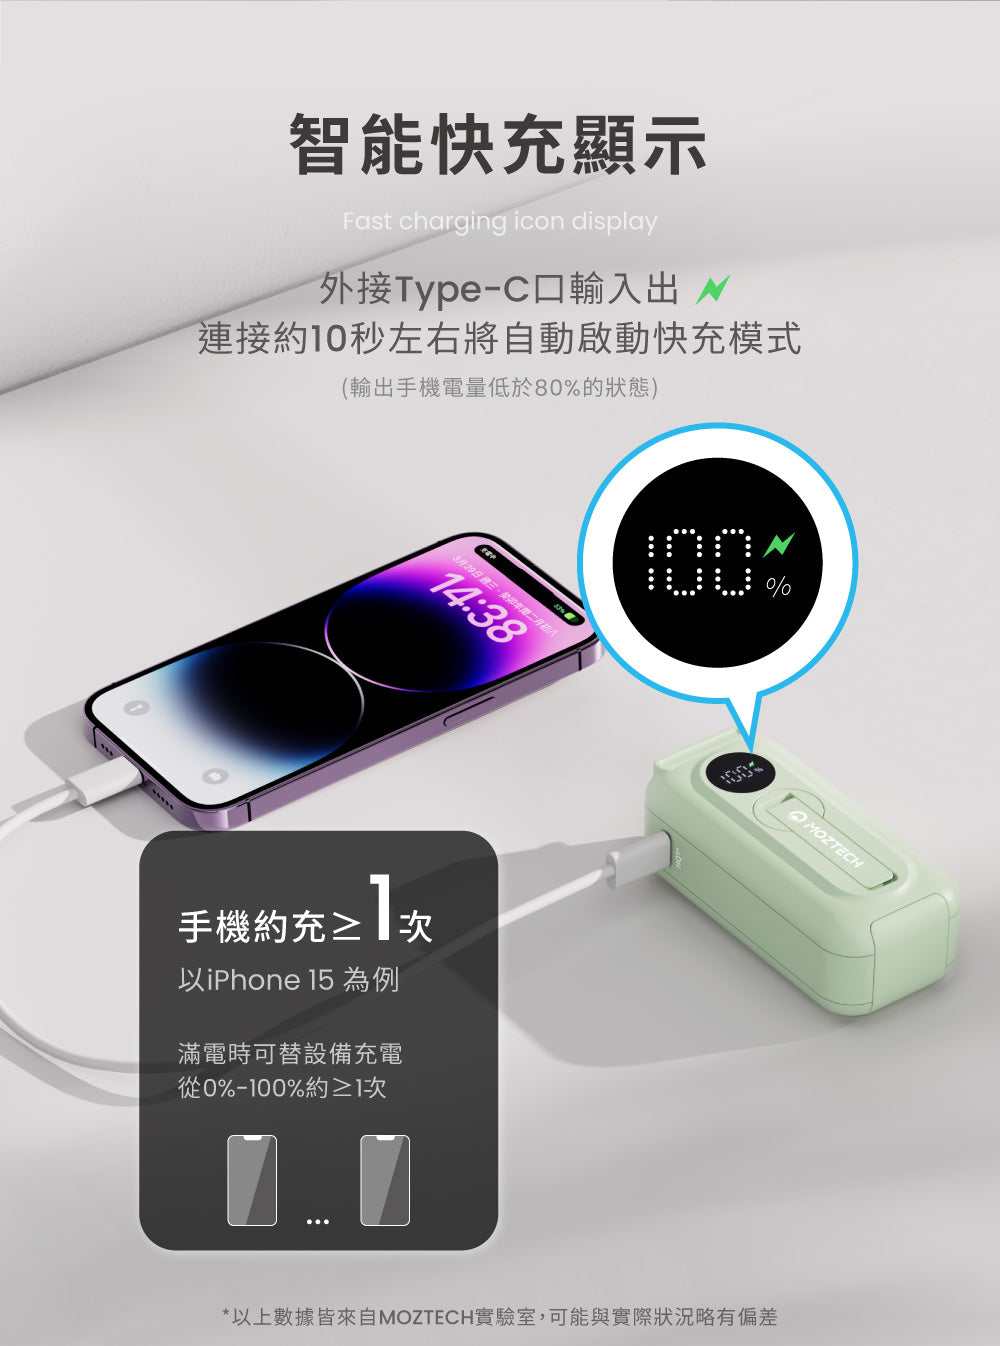 ֥RFast charging icon display~Type-CJXs1kN۰ʱҰʧ֥RҦ(XqqC8%A)R≥]HiPhone 15 Һqɥi]ƥRqq0%-100%0329gT~GK14:38%*HWƾڬҨӦMOZTECH,iPڪptMOZTECH